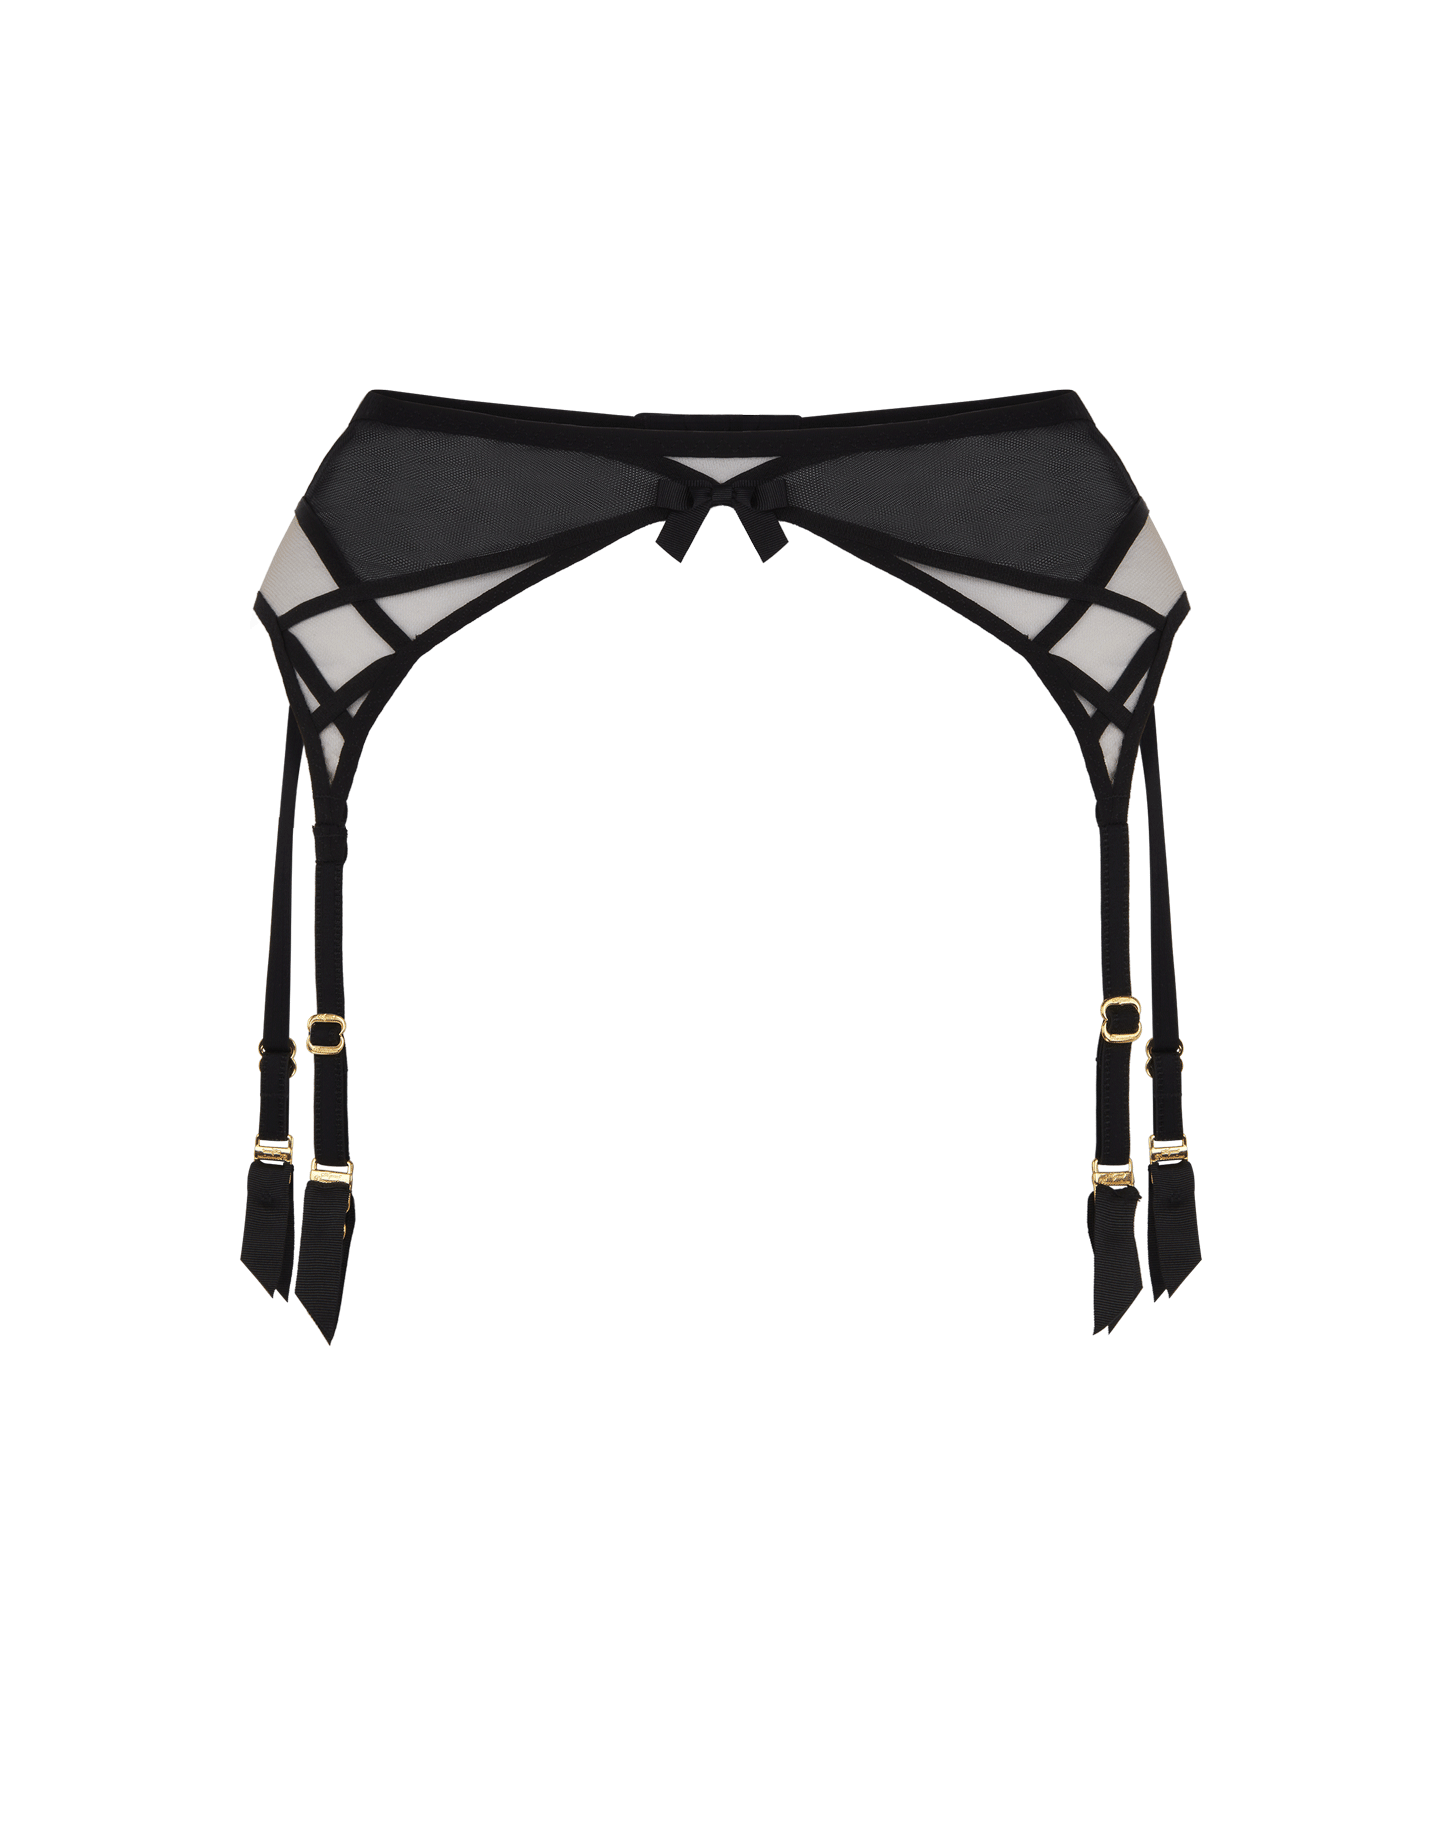 Cherise Suspender in Black | Agent Provocateur All Lingerie